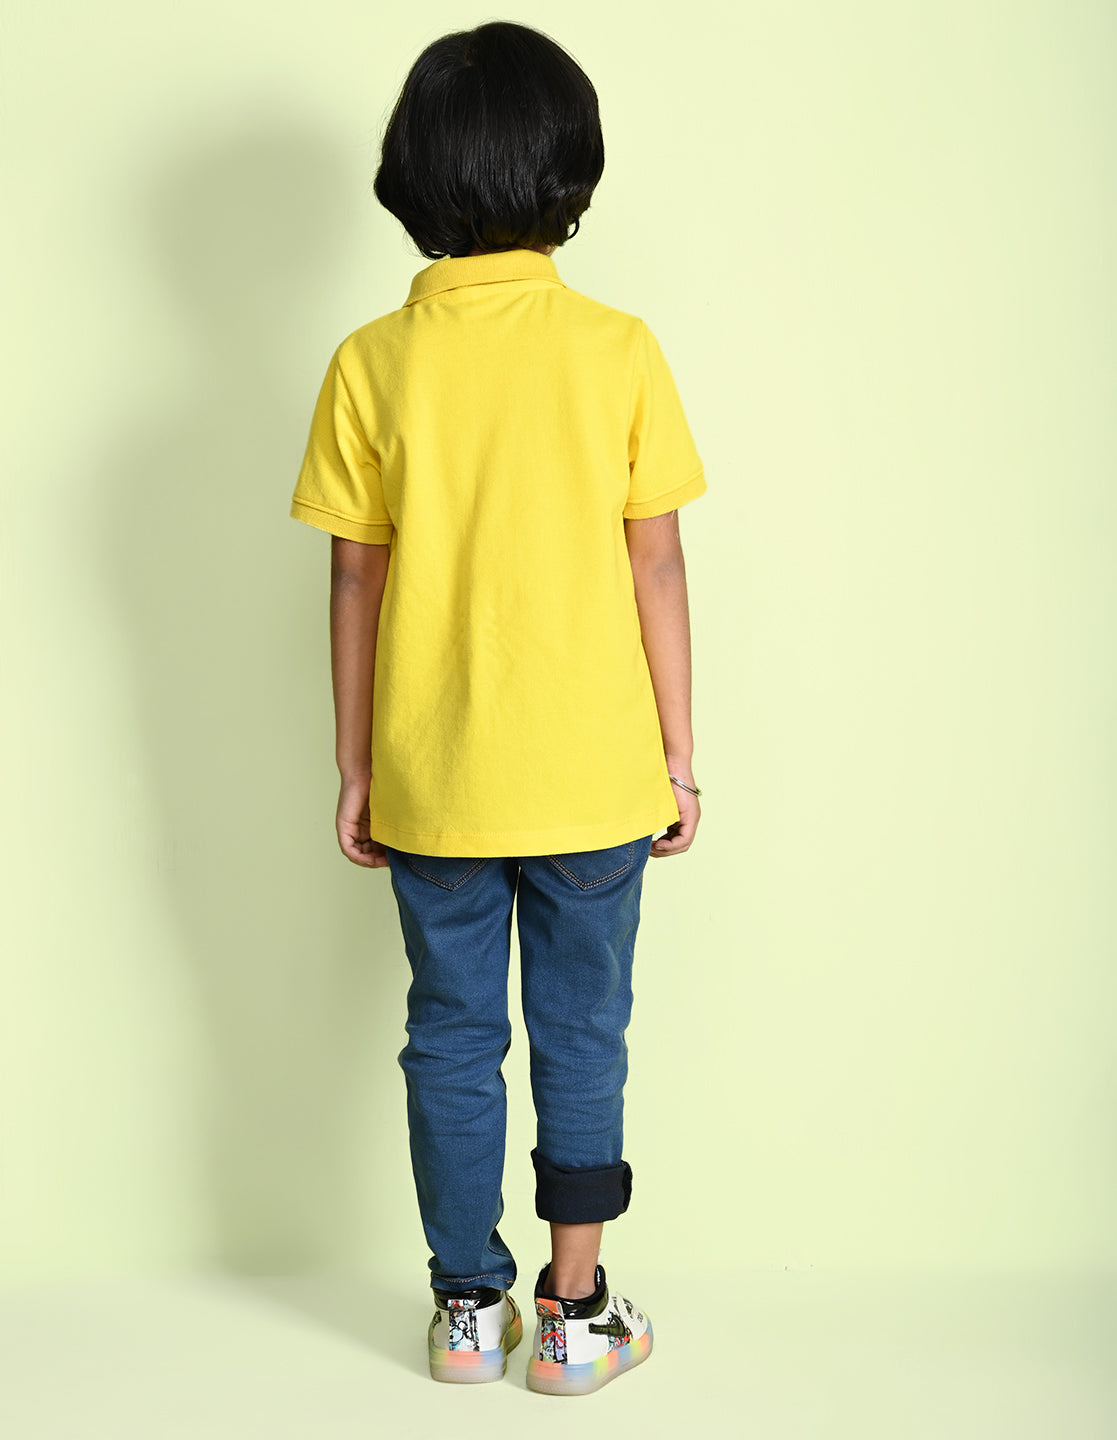 Nusyl California Printed Bright yellow Boys polo T-shirts